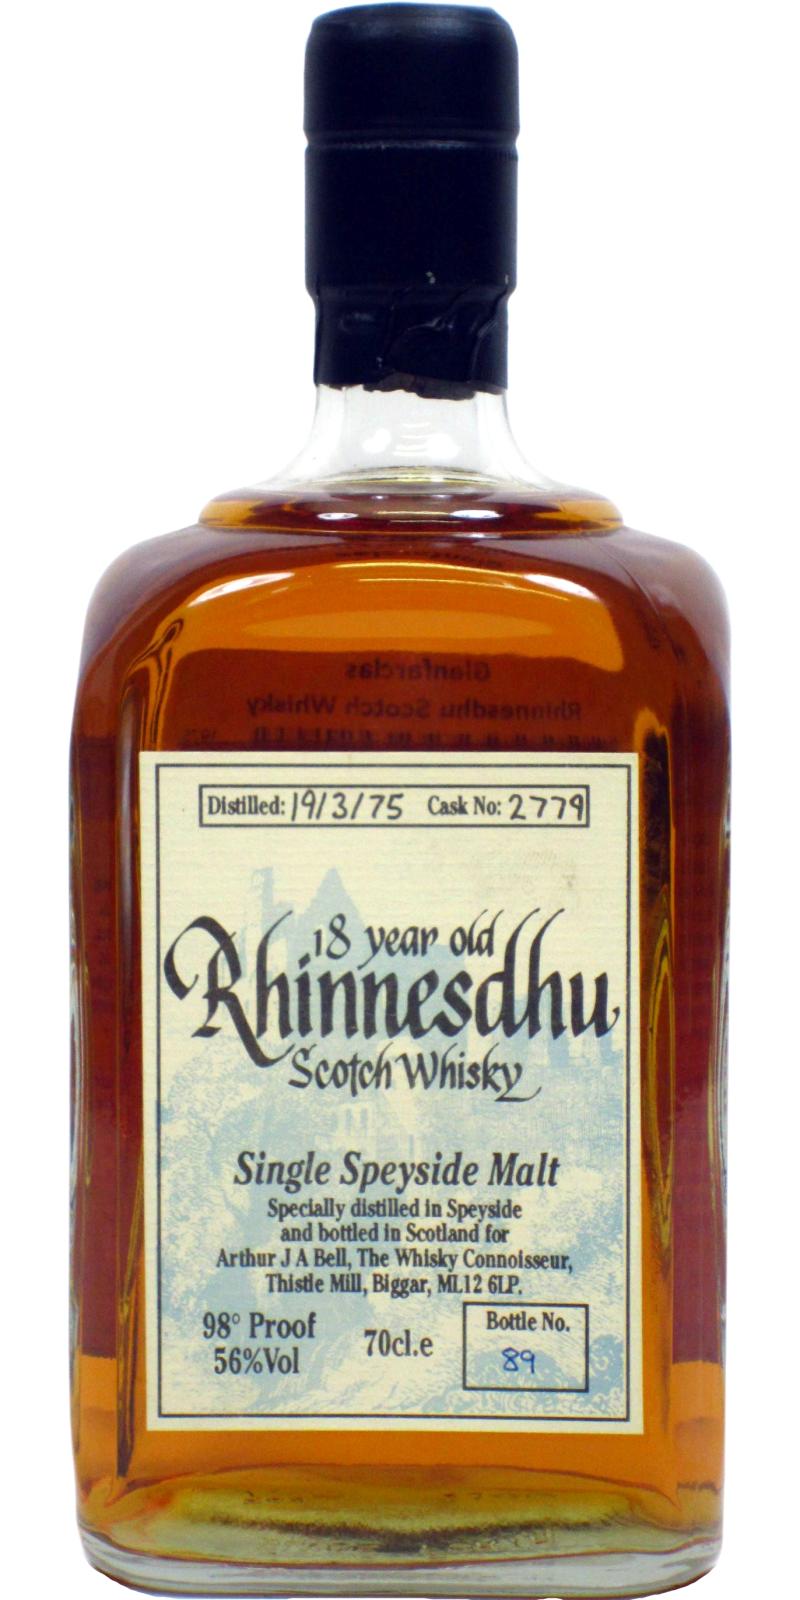 Rhinnesdhu 1975 WC Oak 2779 Arthur J A Bell The Whisky Connoisseur 56% 700ml